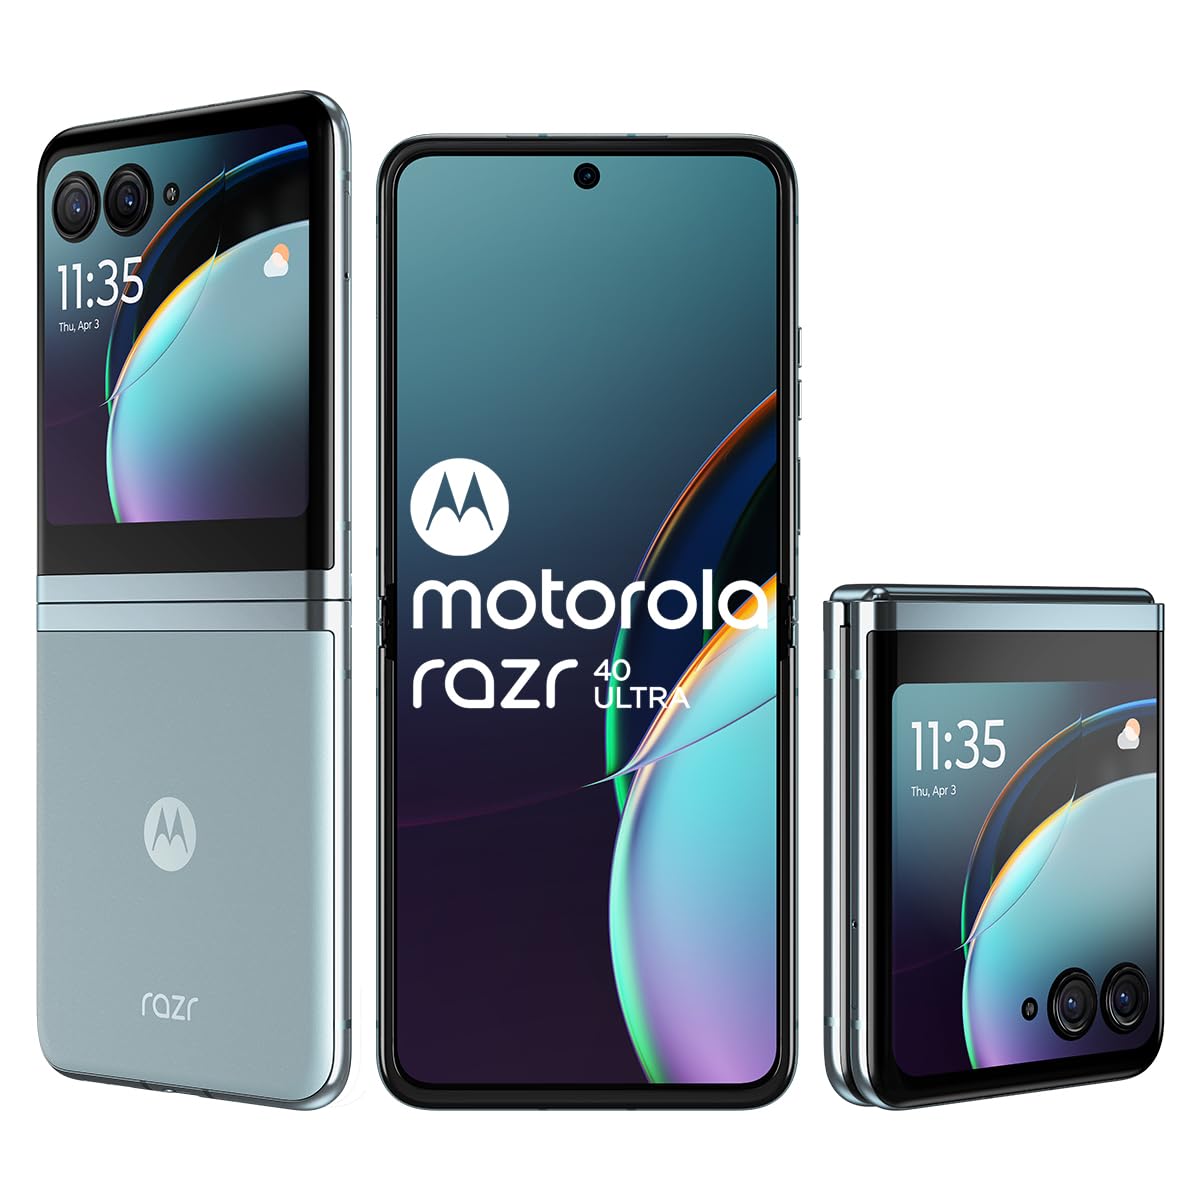 Motorola razr 40 Ultra (Glacier Blue, 8GB RAM, 256GB Storage) | 3.6" External AM